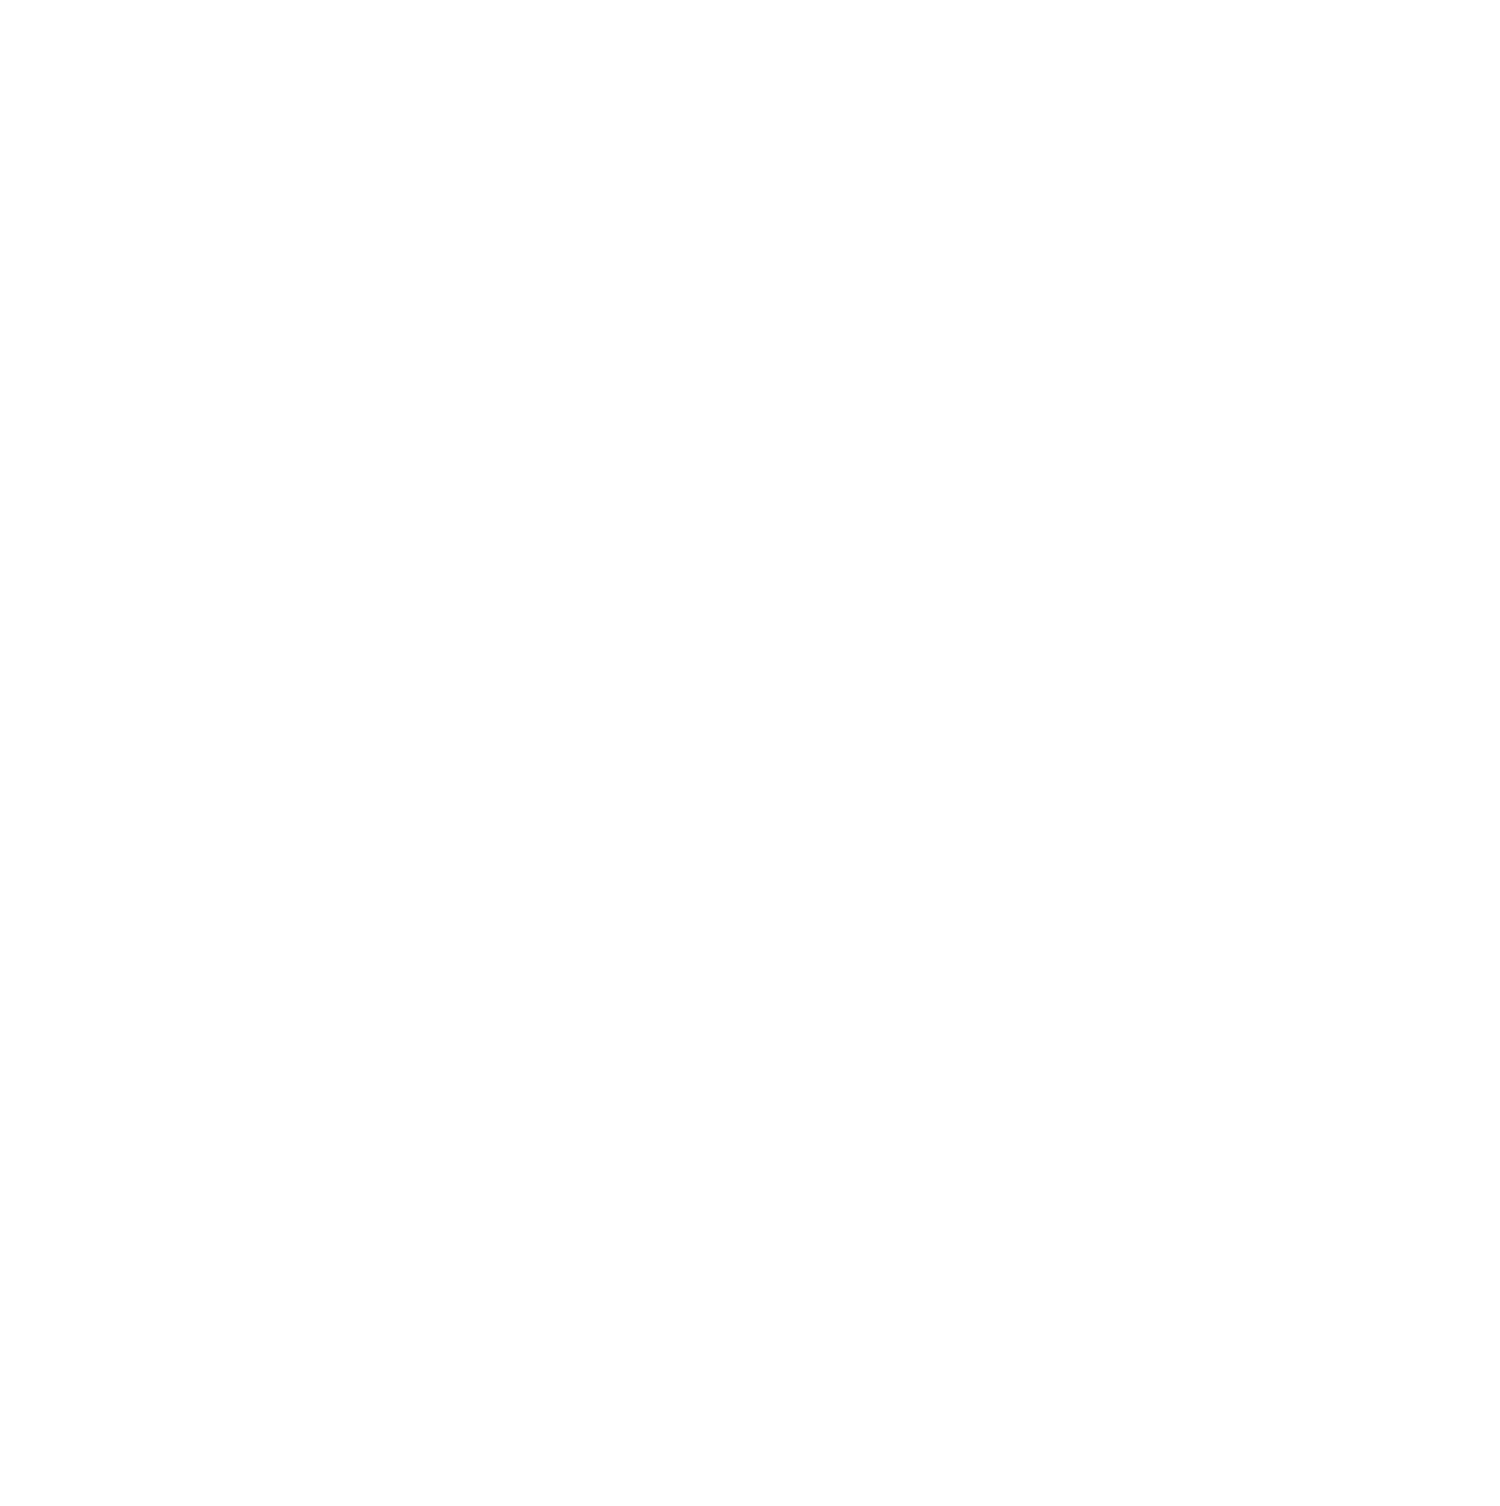 Seera Holding Group logo for dark backgrounds (transparent PNG)